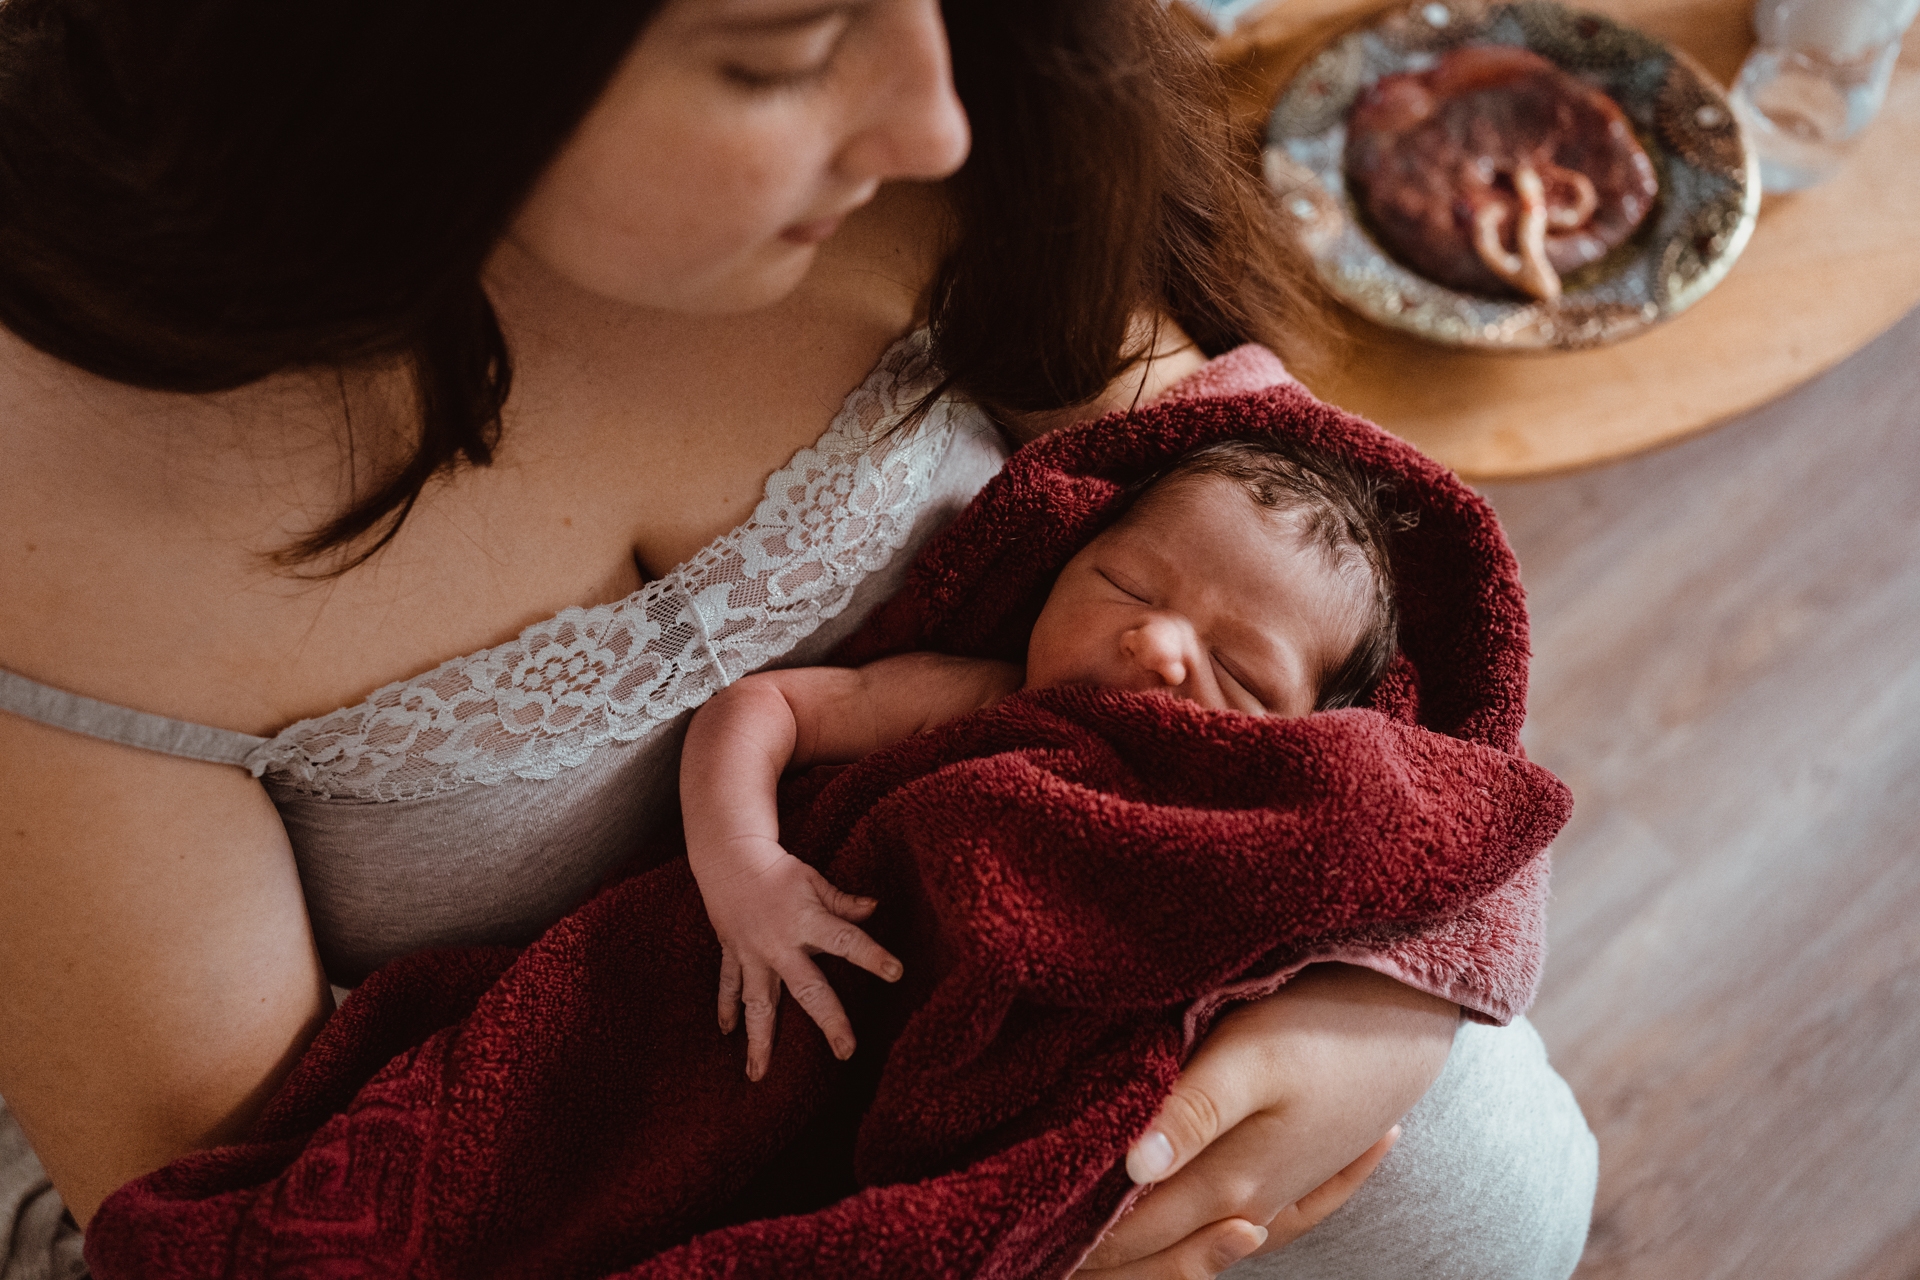 Frischgeboren. Wundervolles neues Leben. Dokumentarische Fotografie. Geburtsfotografie.